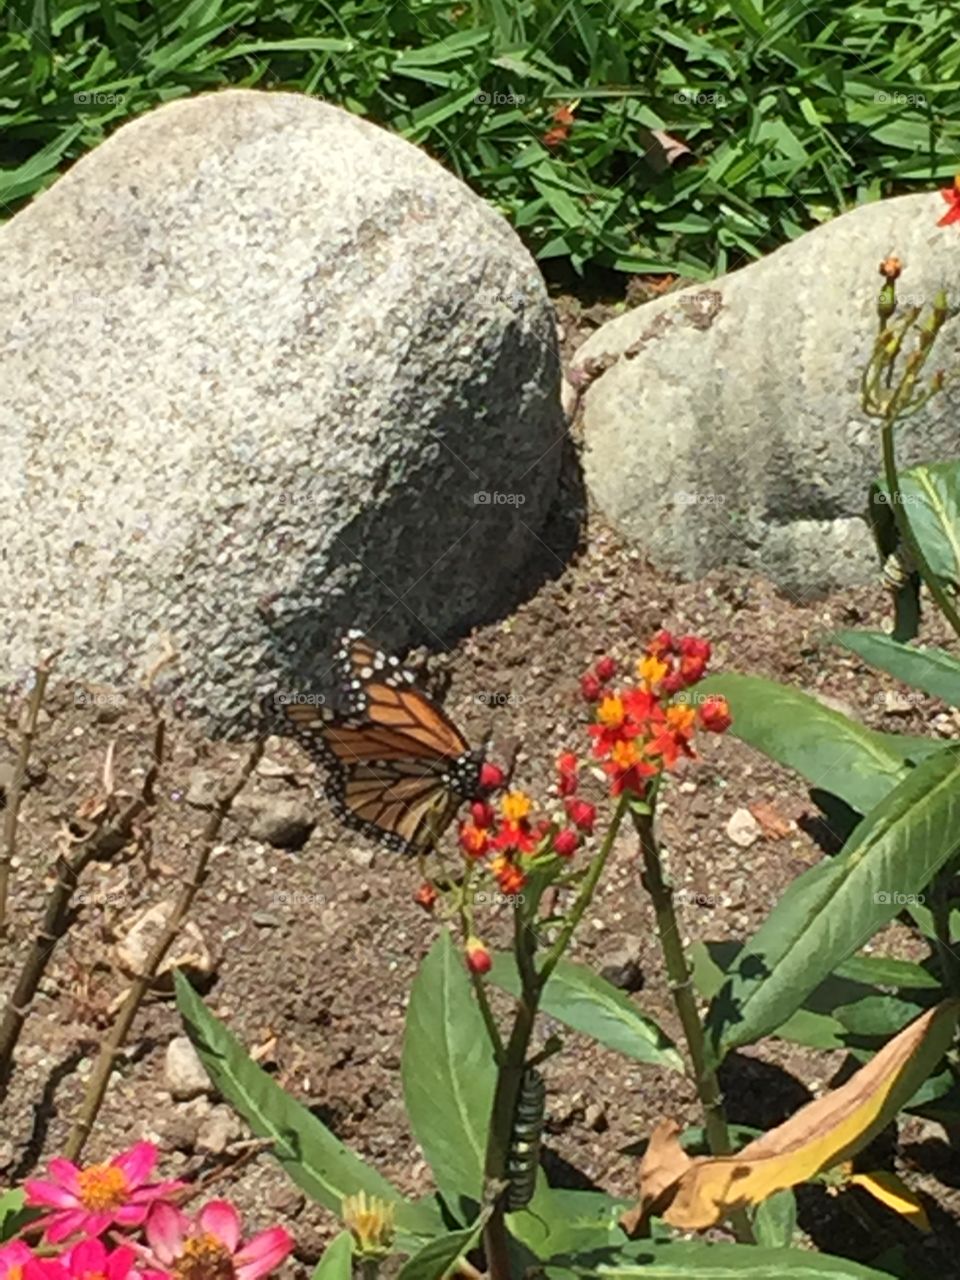 Butterfly and caterpillar on Milkweed 